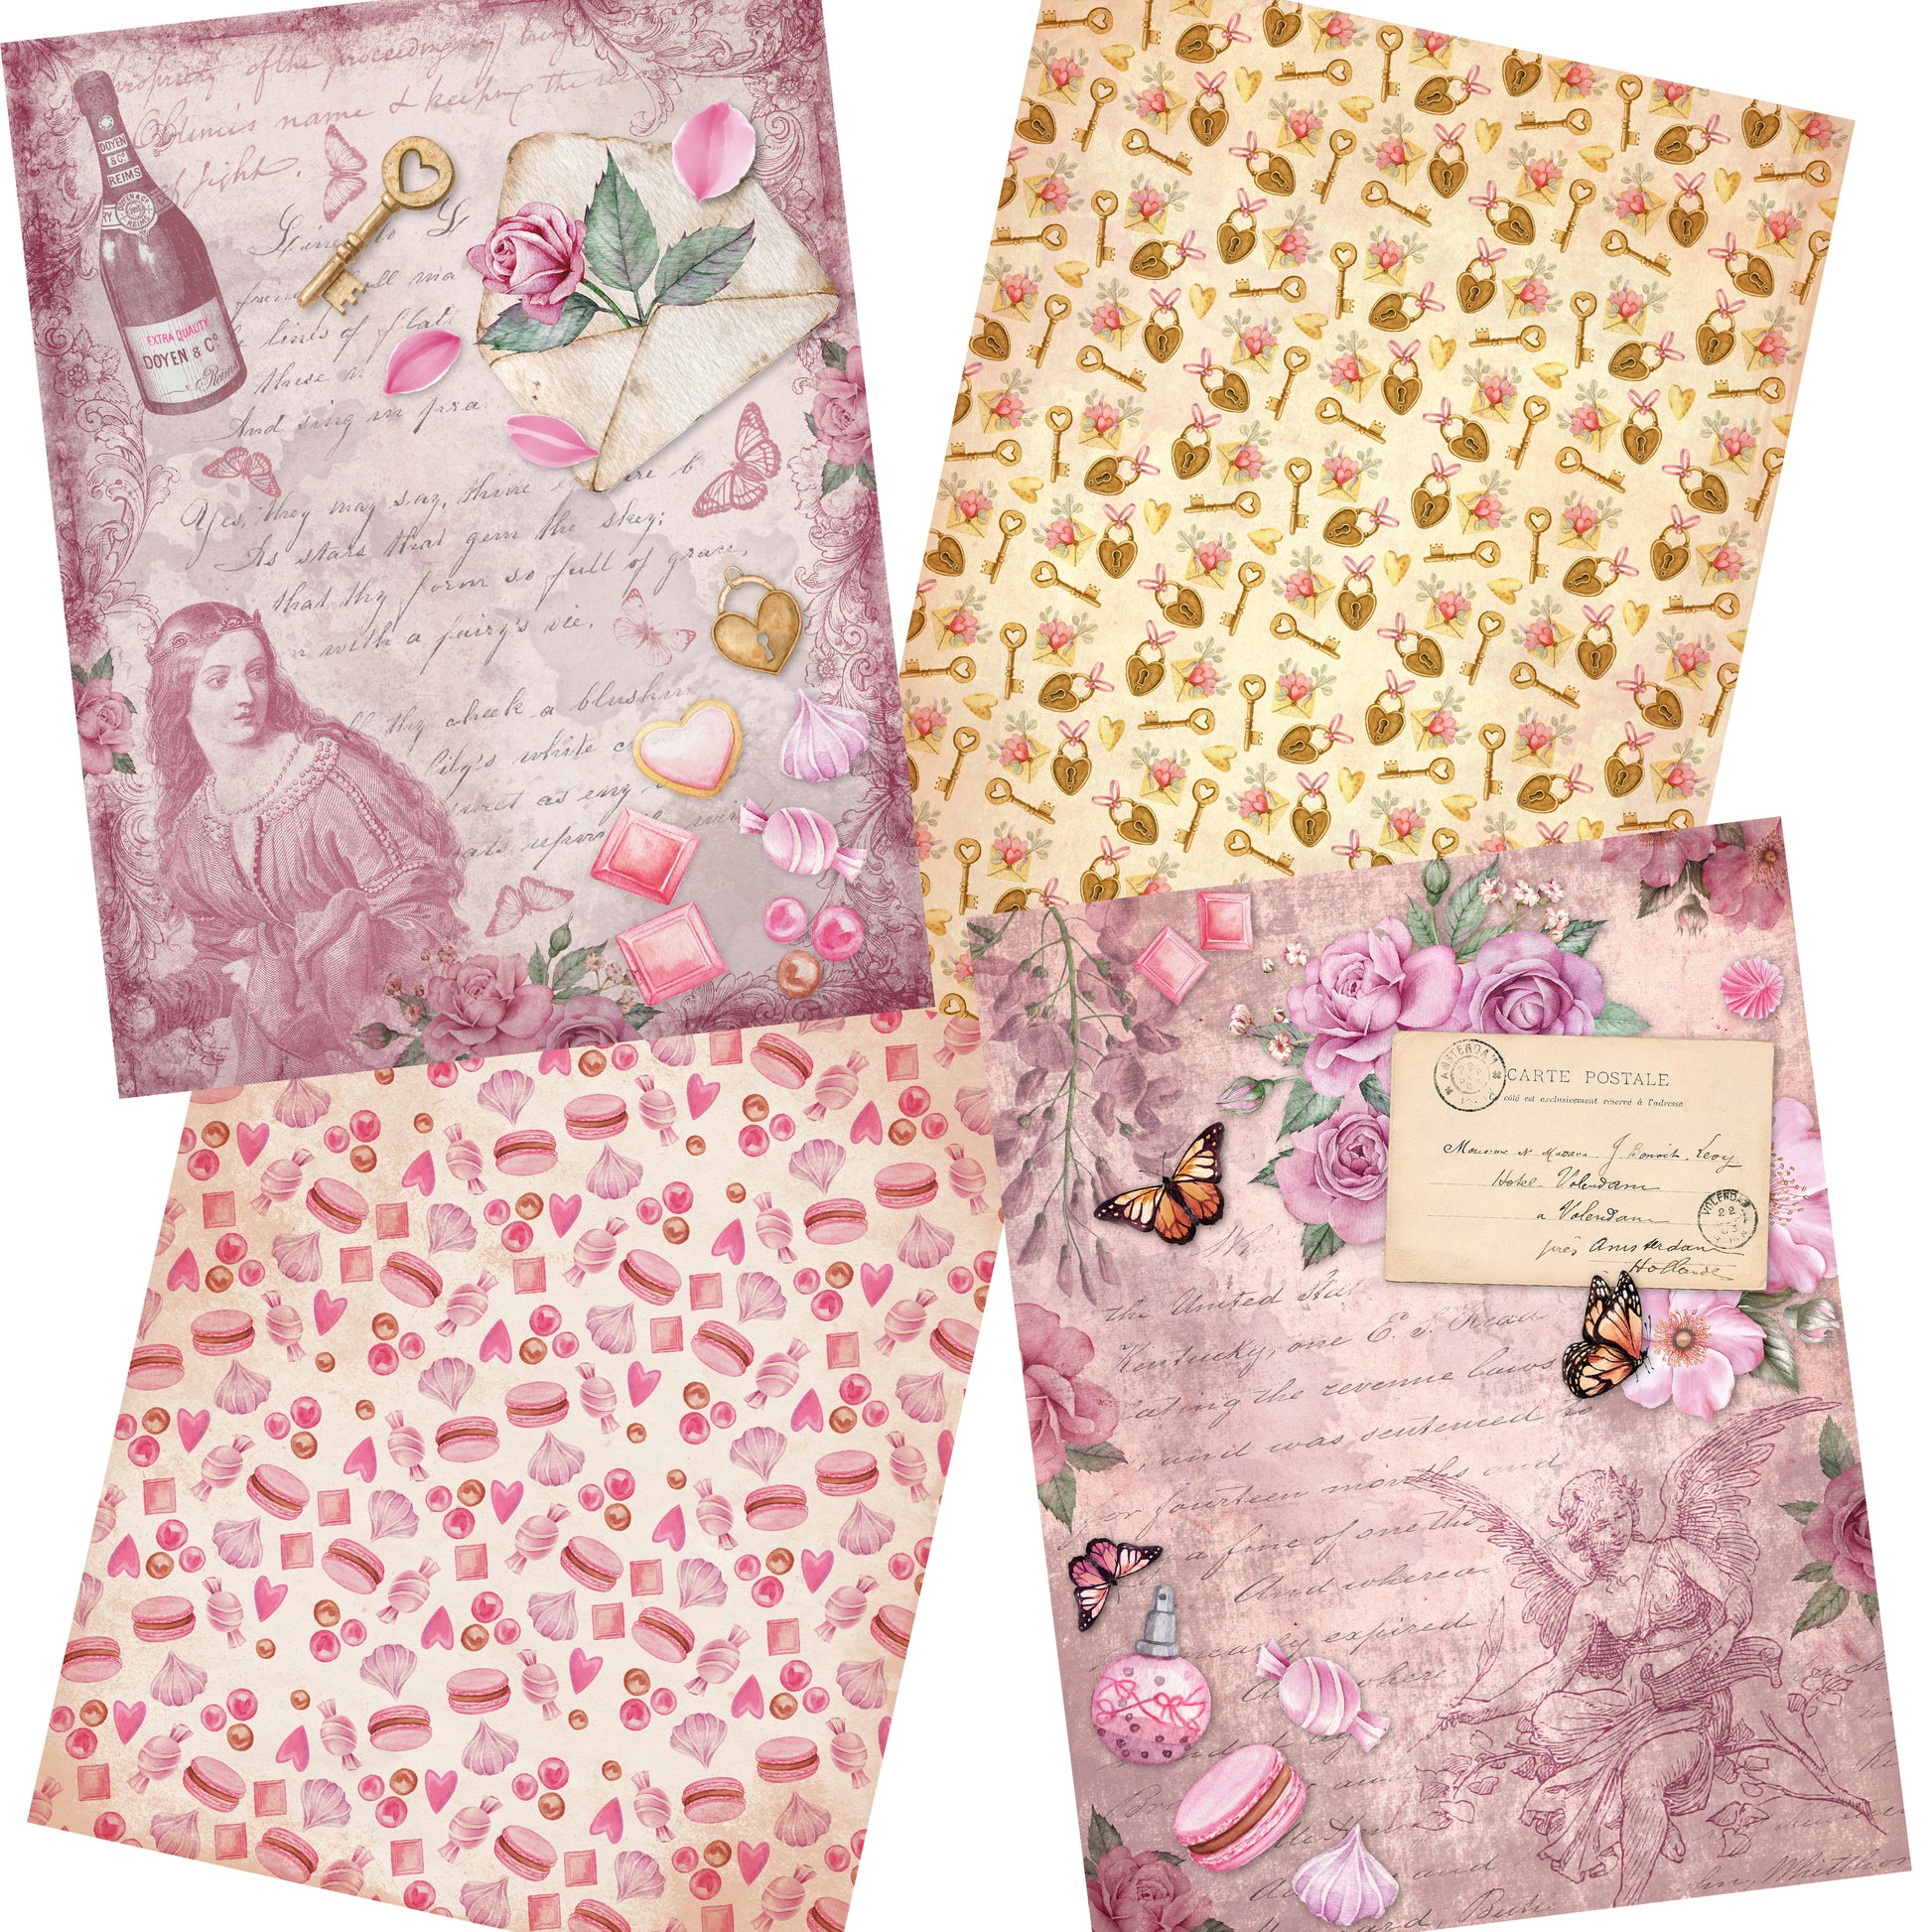 Be My Valentine Paper Pack - 7332 - EZscrapbooks Scrapbook Layouts Journals, Love - Valentine, paper pack